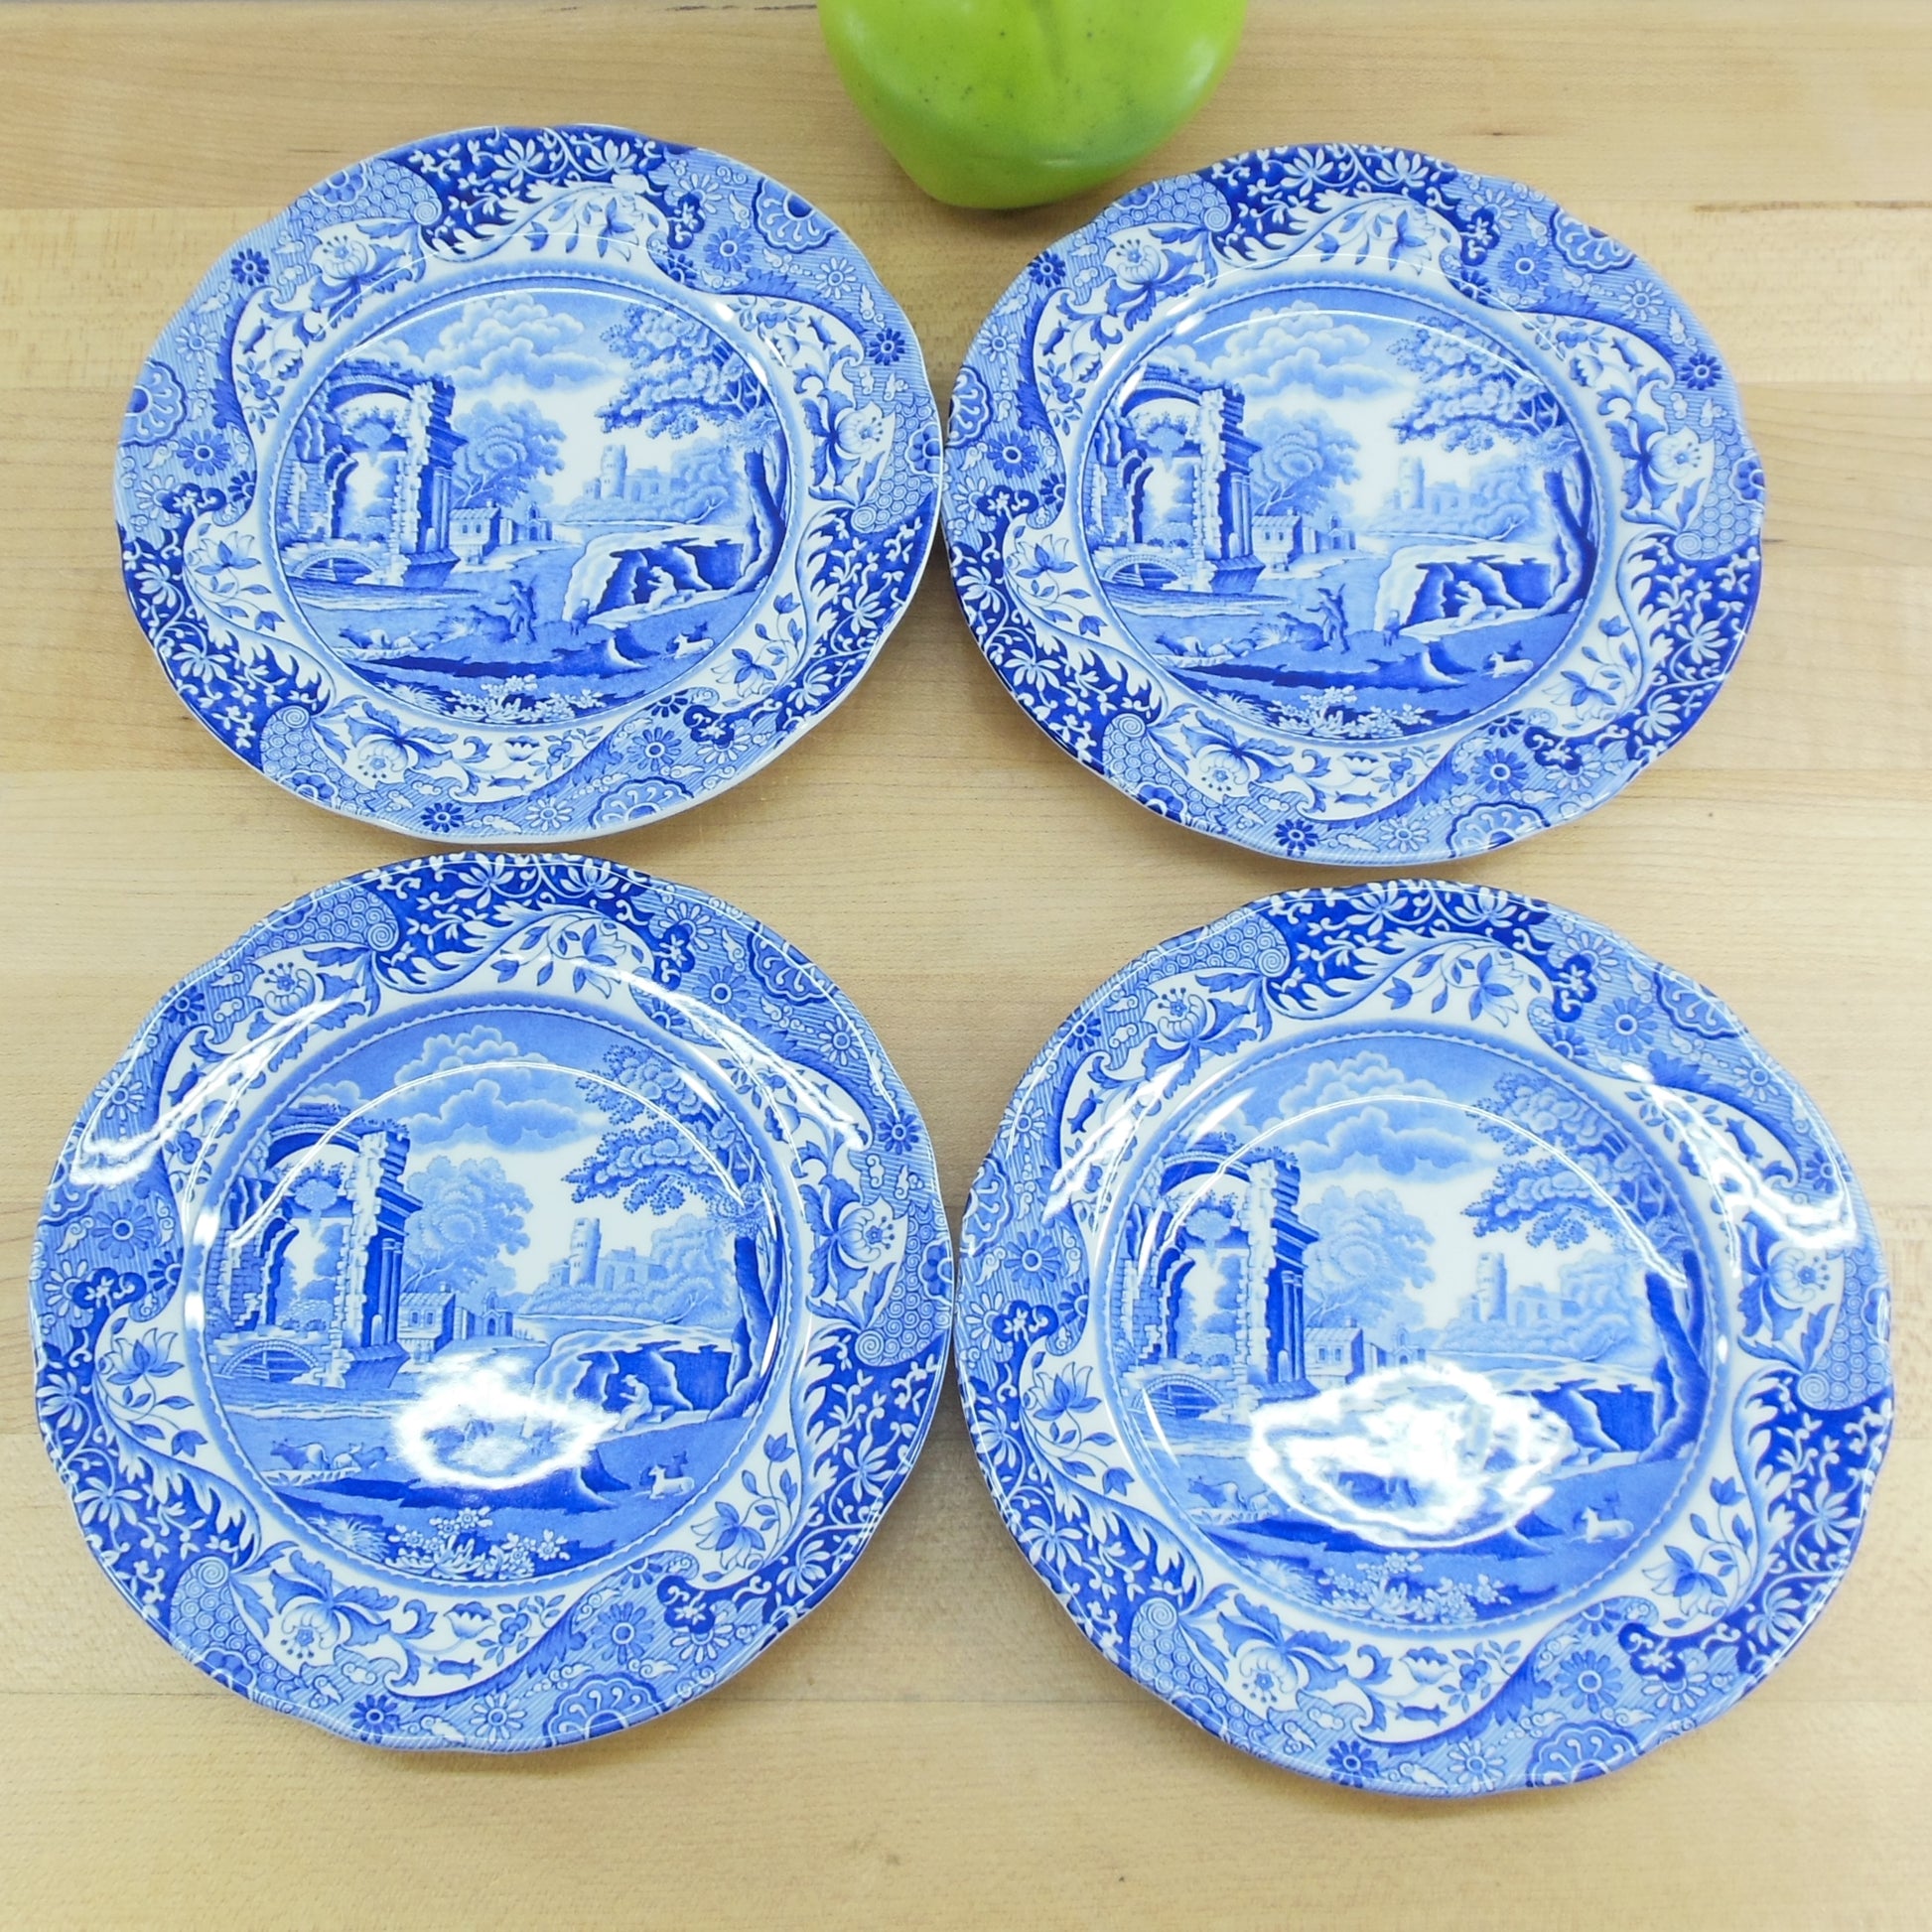 Spode England Blue Italian Bread & Butter Plates - 4 Set Used